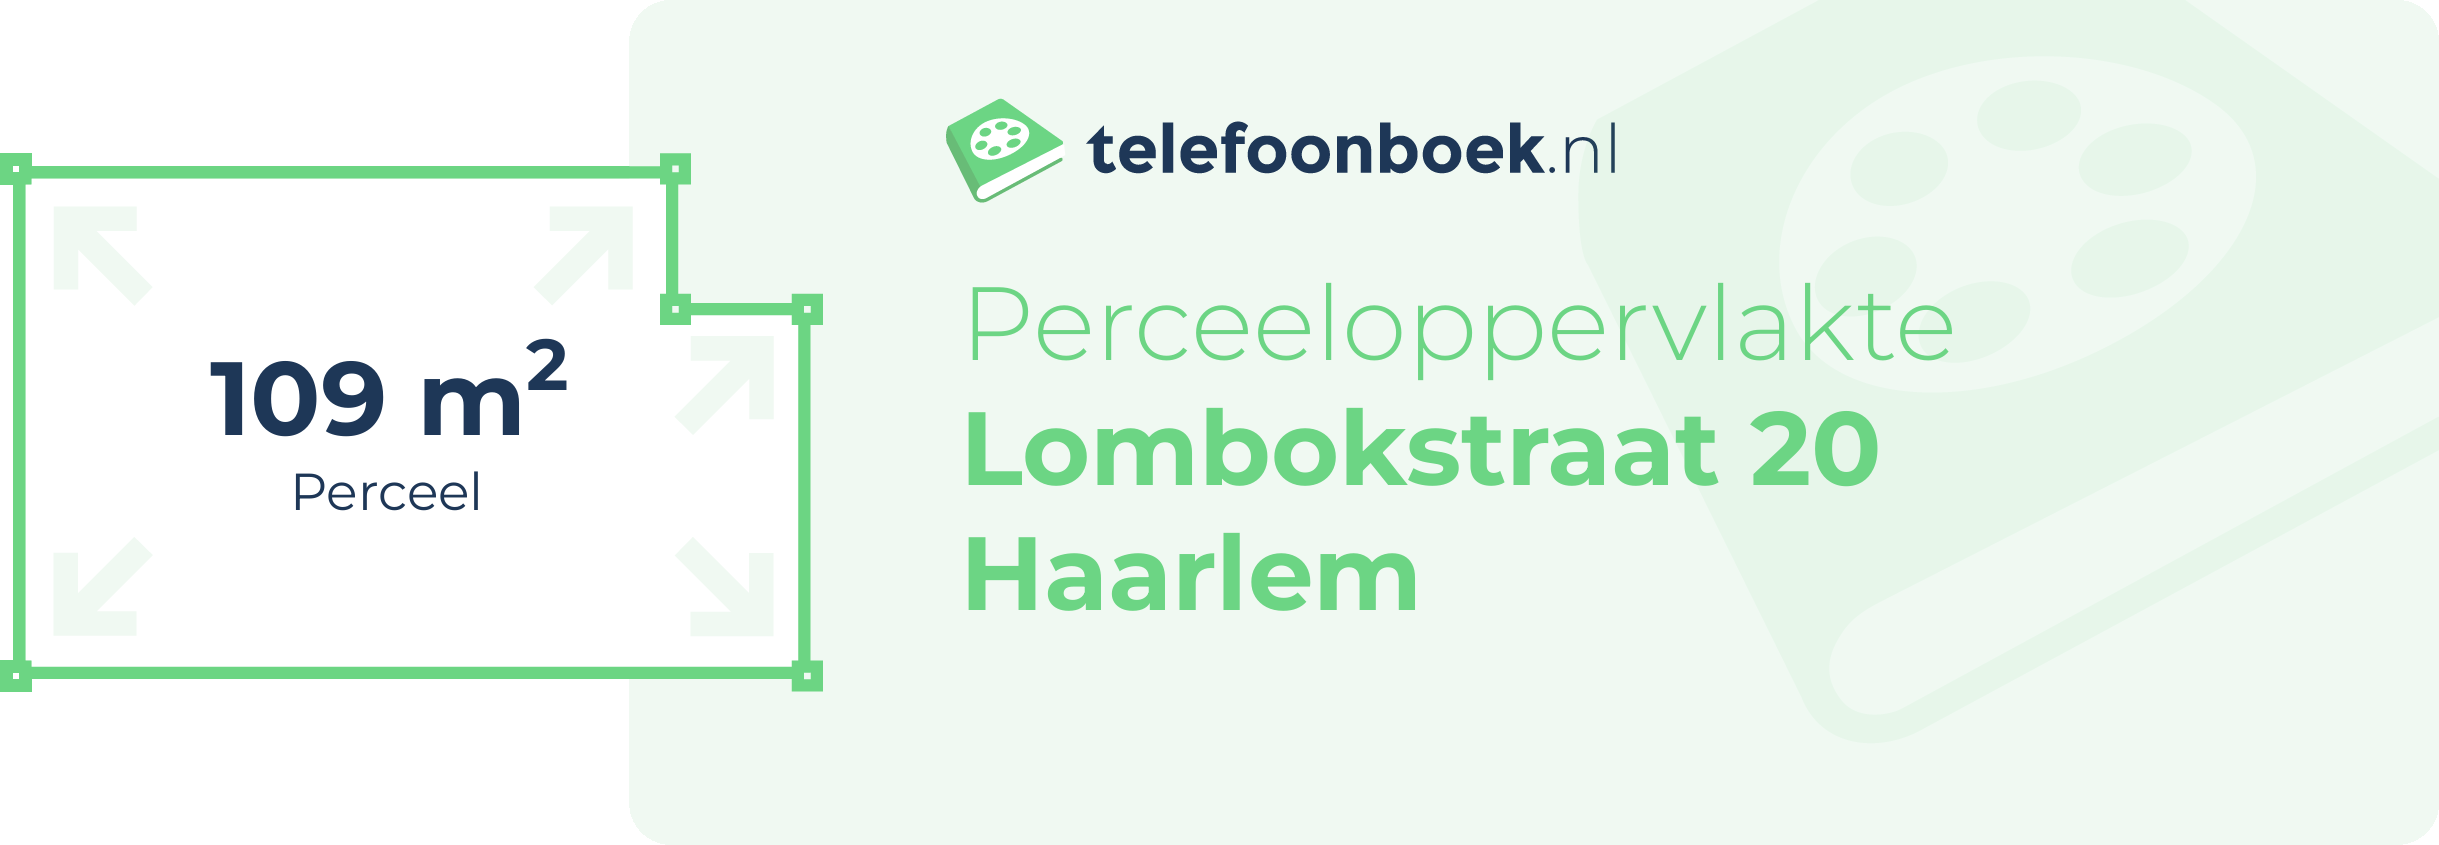 Perceeloppervlakte Lombokstraat 20 Haarlem